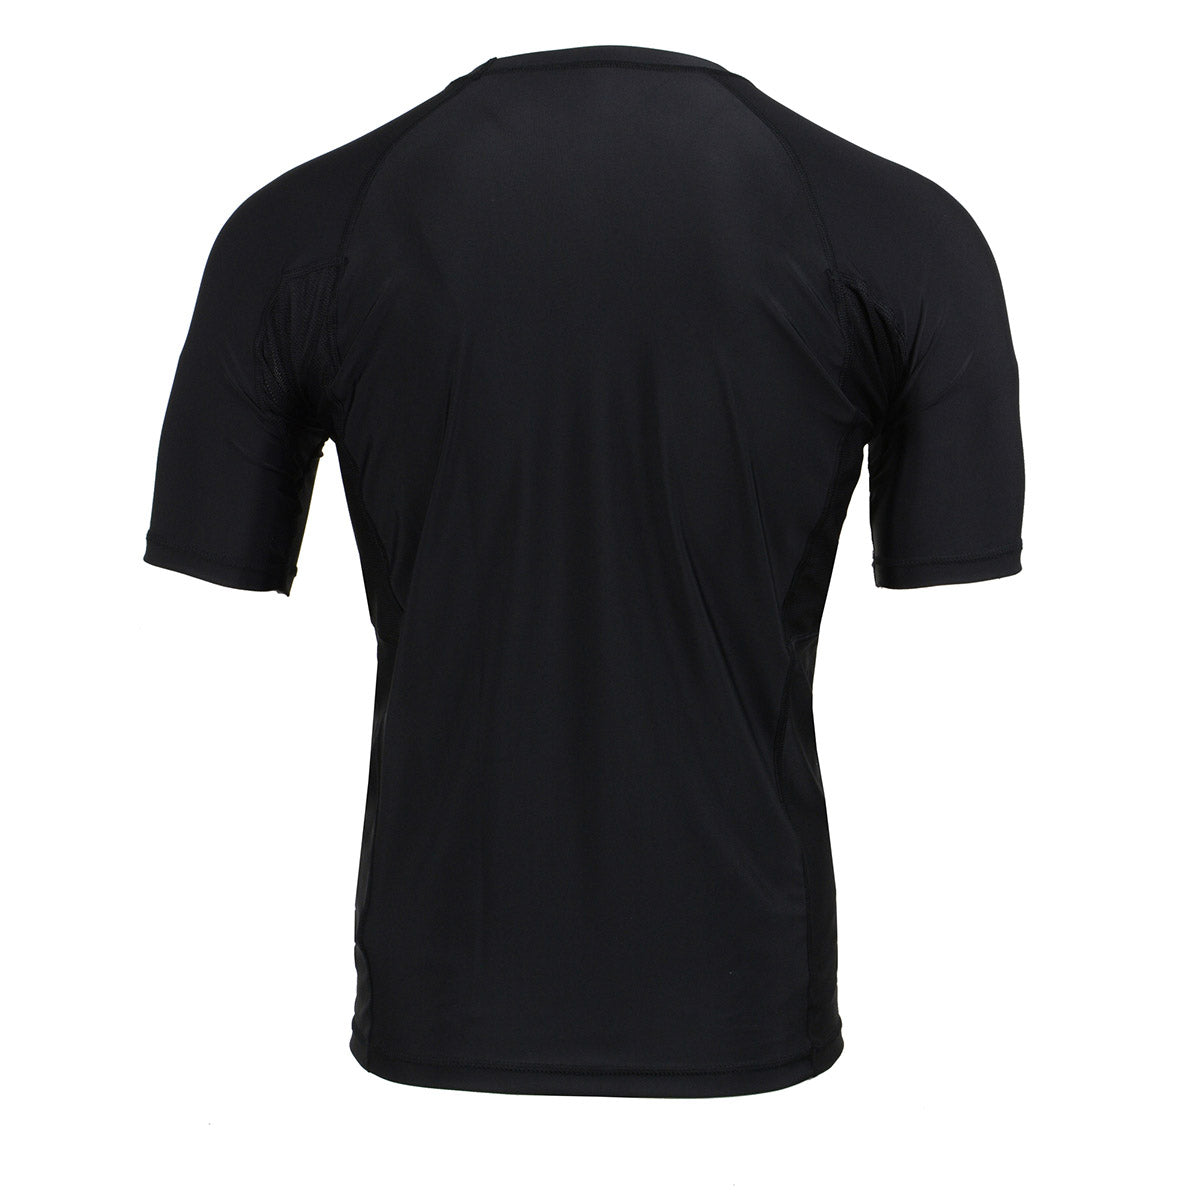 X-Fitness XFM7001 Men's Black Short Sleeve Compression Rash Guard Athletic Shirt- MMA, BJJ, Wrestling, Cross Training